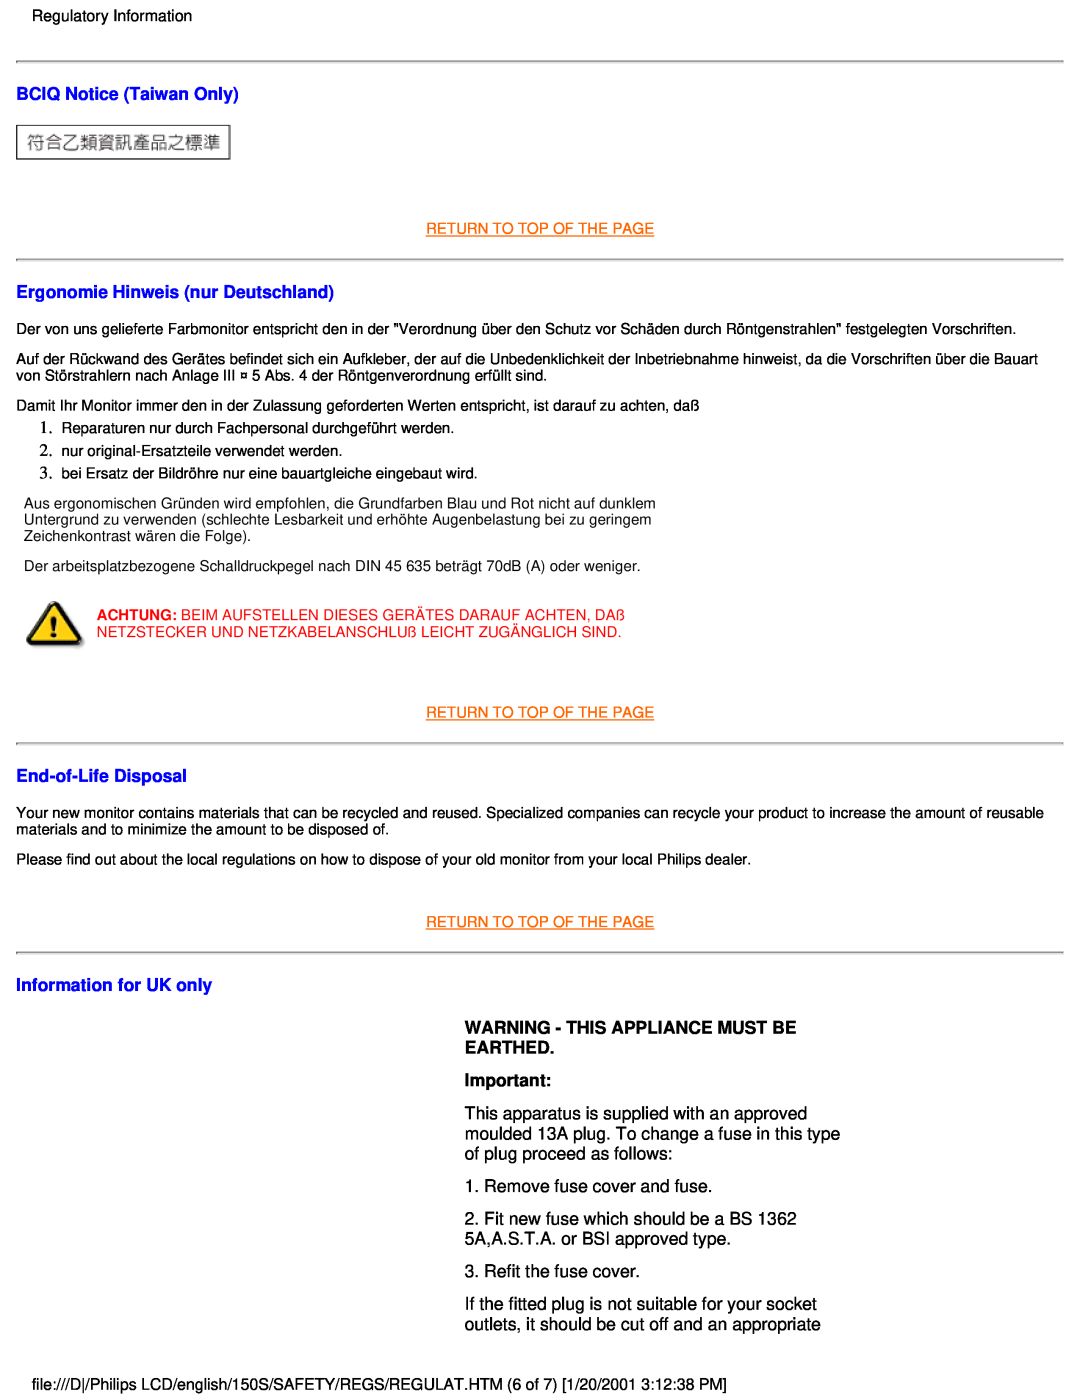 Philips 150S BCIQ Notice Taiwan Only, Ergonomie Hinweis nur Deutschland, End-of-Life Disposal, Information for UK only 